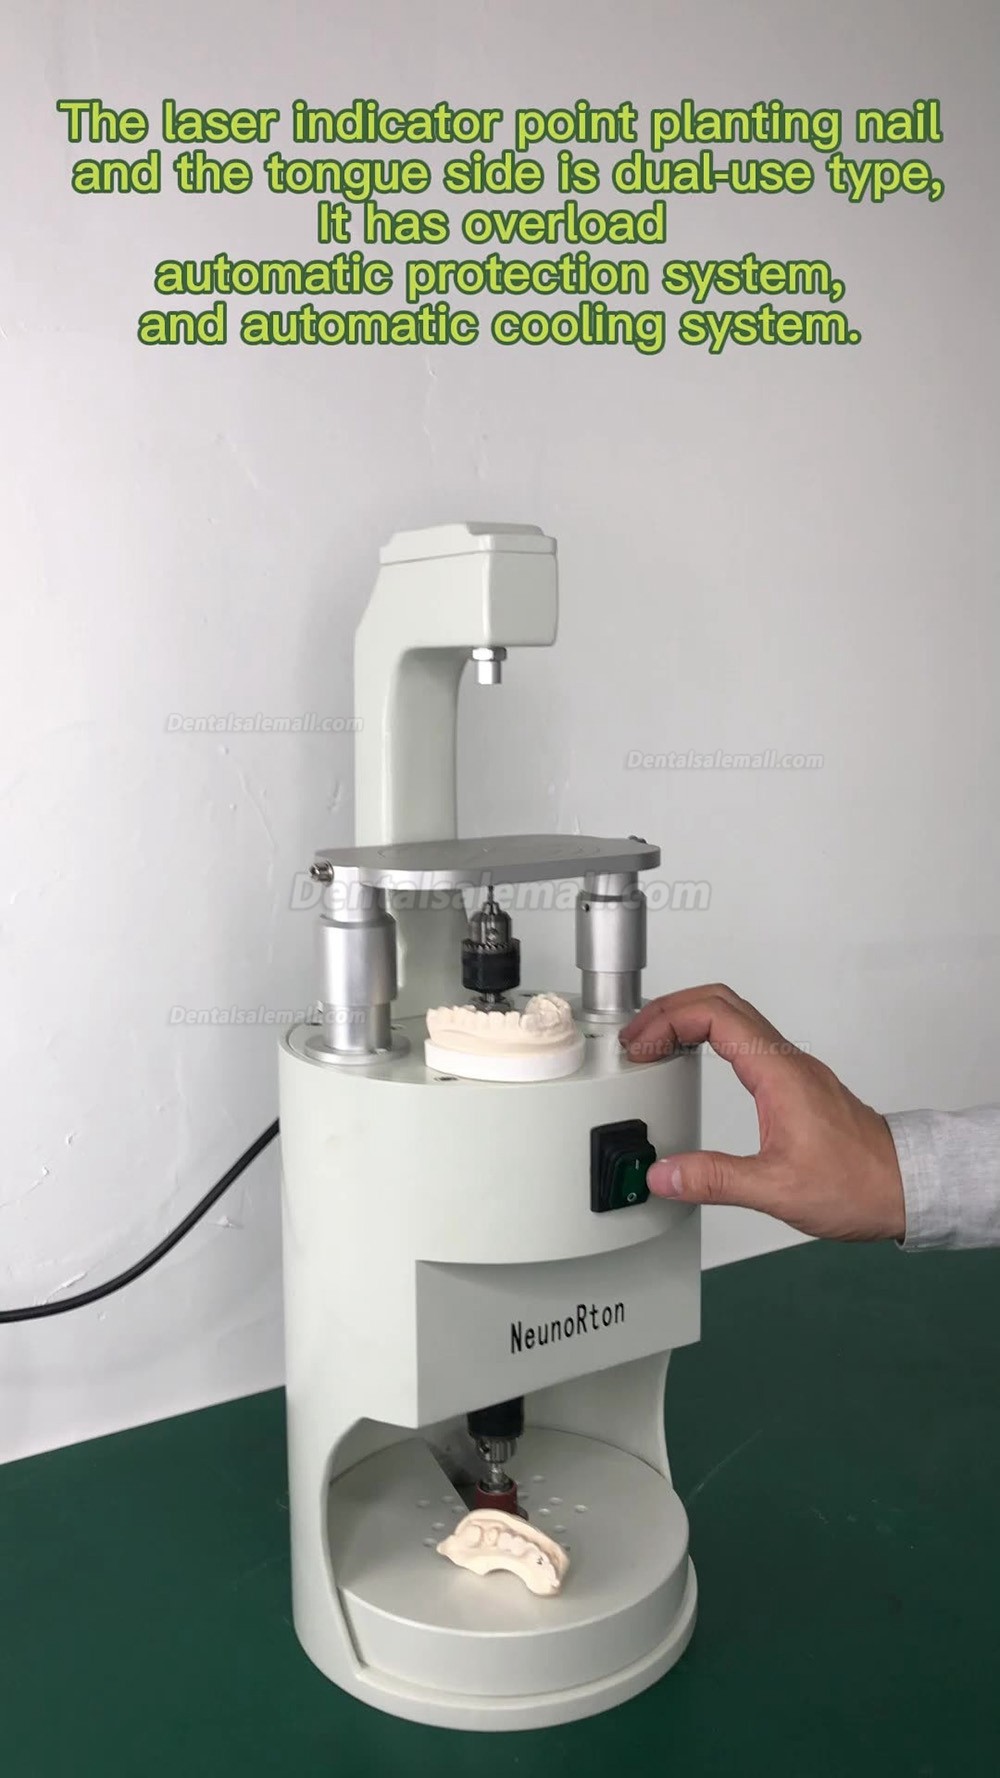 150W Dental Lab Laser Pin Hole Drilling Machine For Plaster Model Set 2800rpm S-701